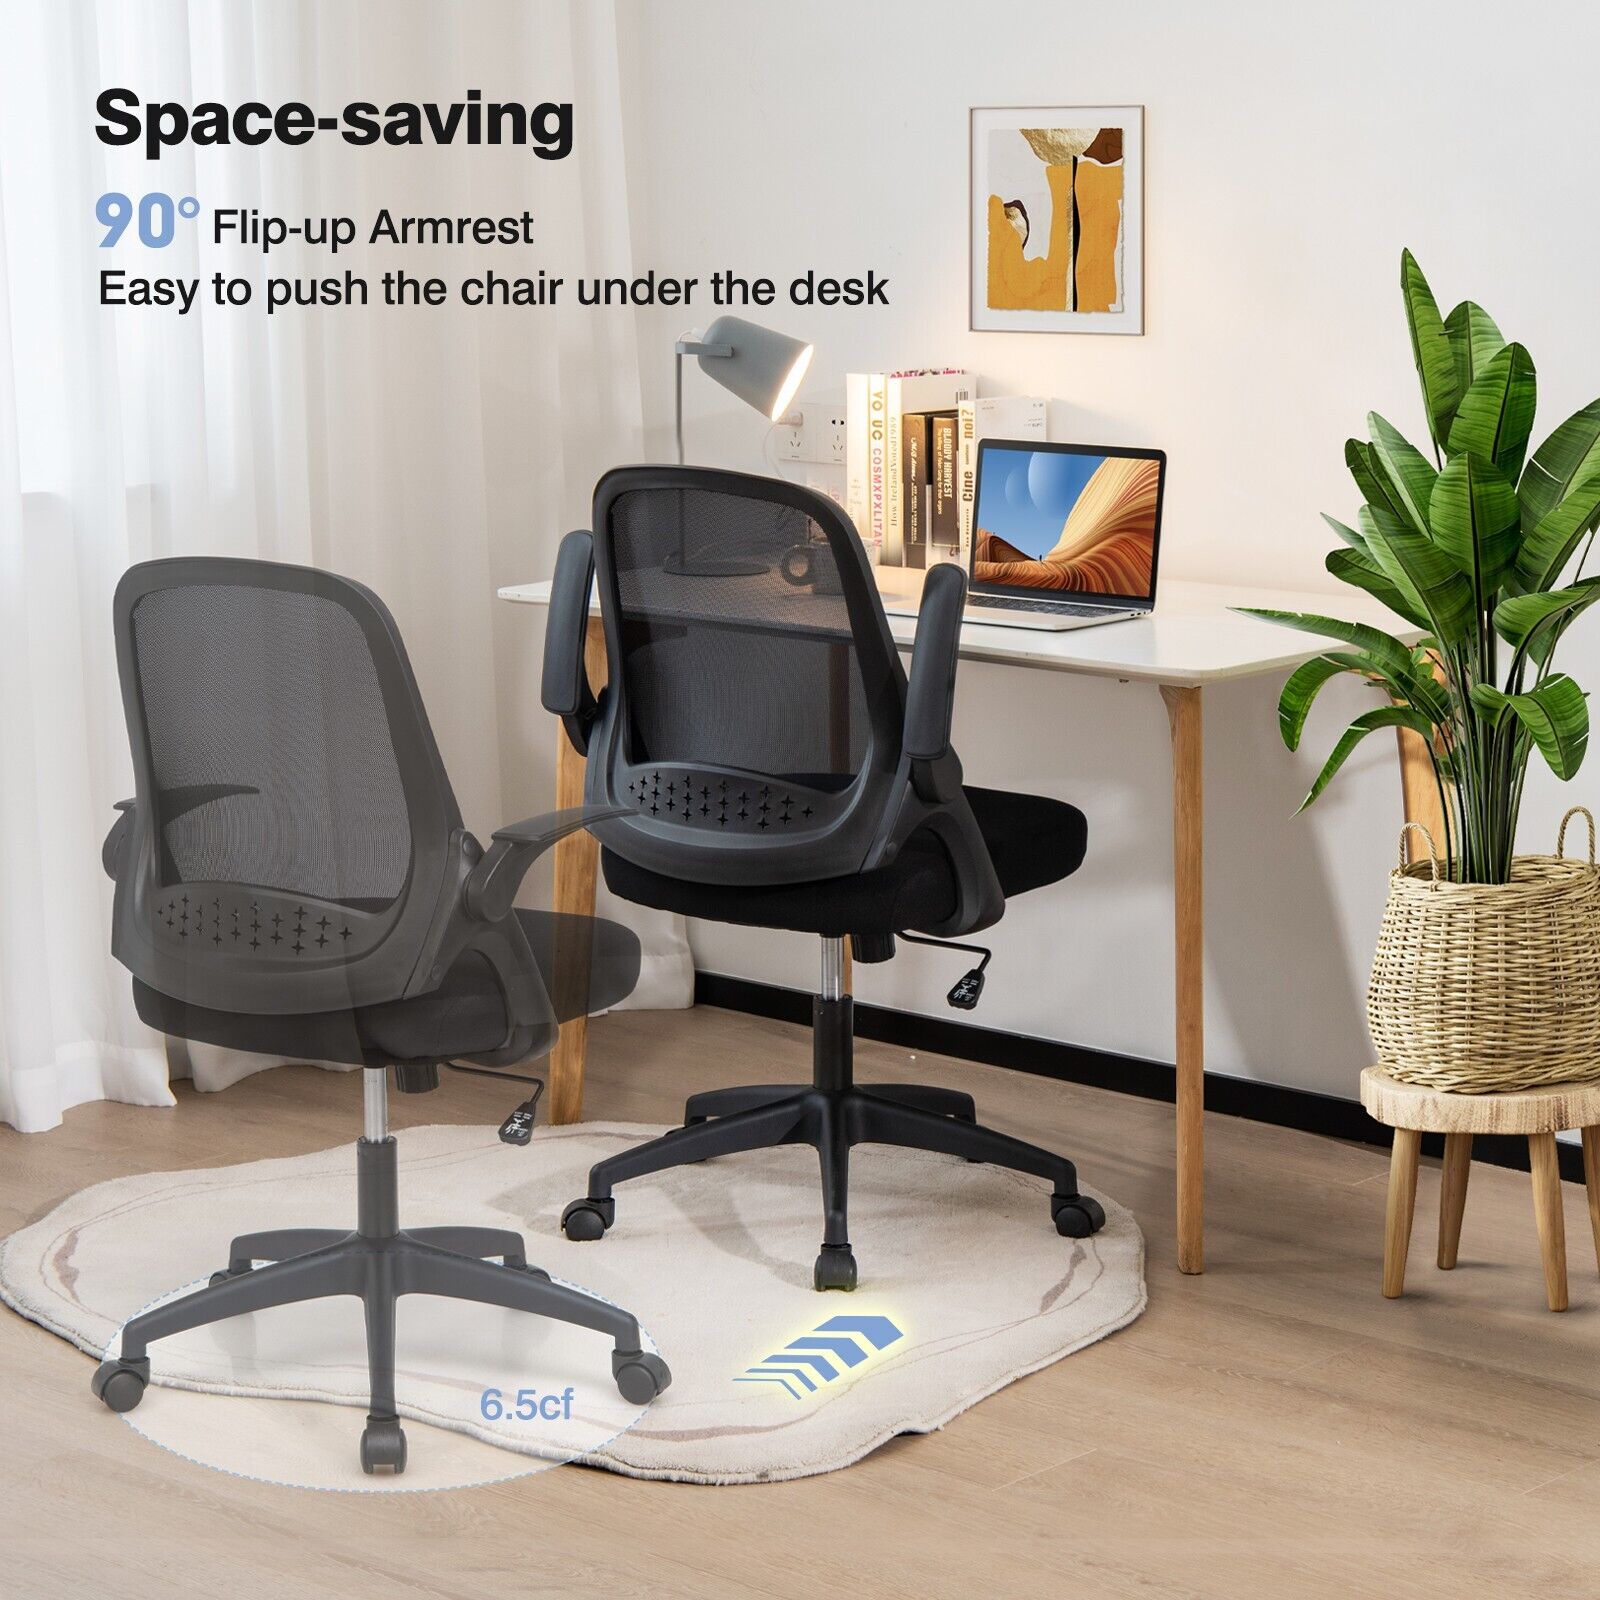 Office_Chair_Space-saving-3.jpg